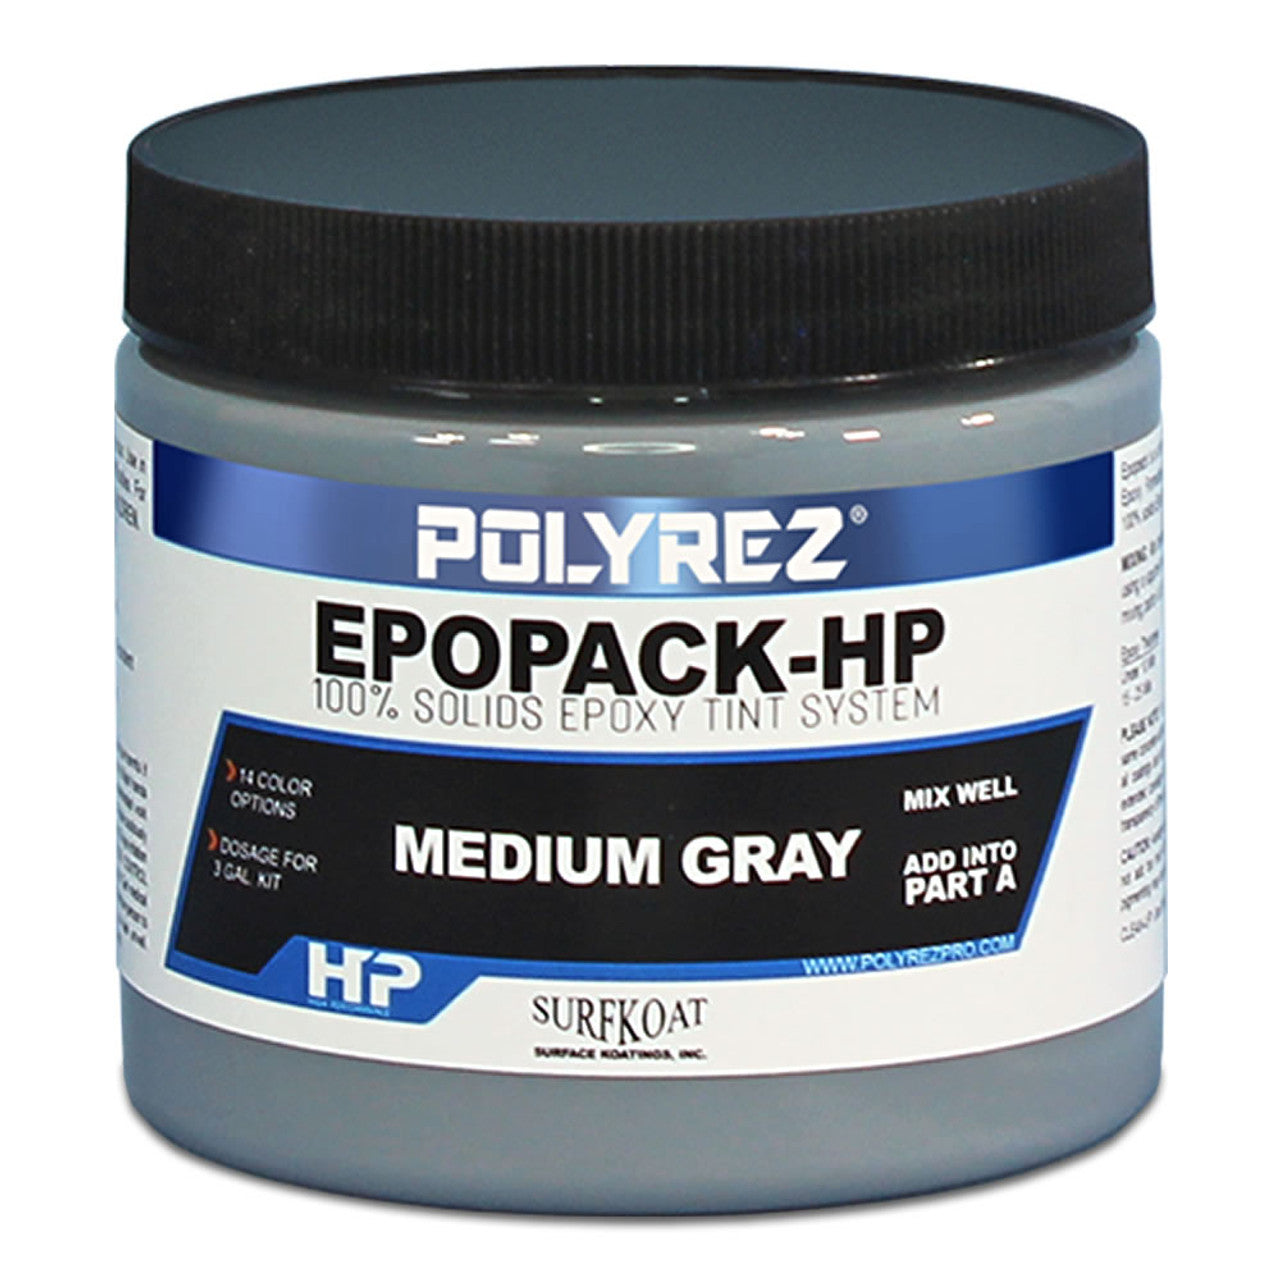 Epopack-HP (Buff) 1 Pint